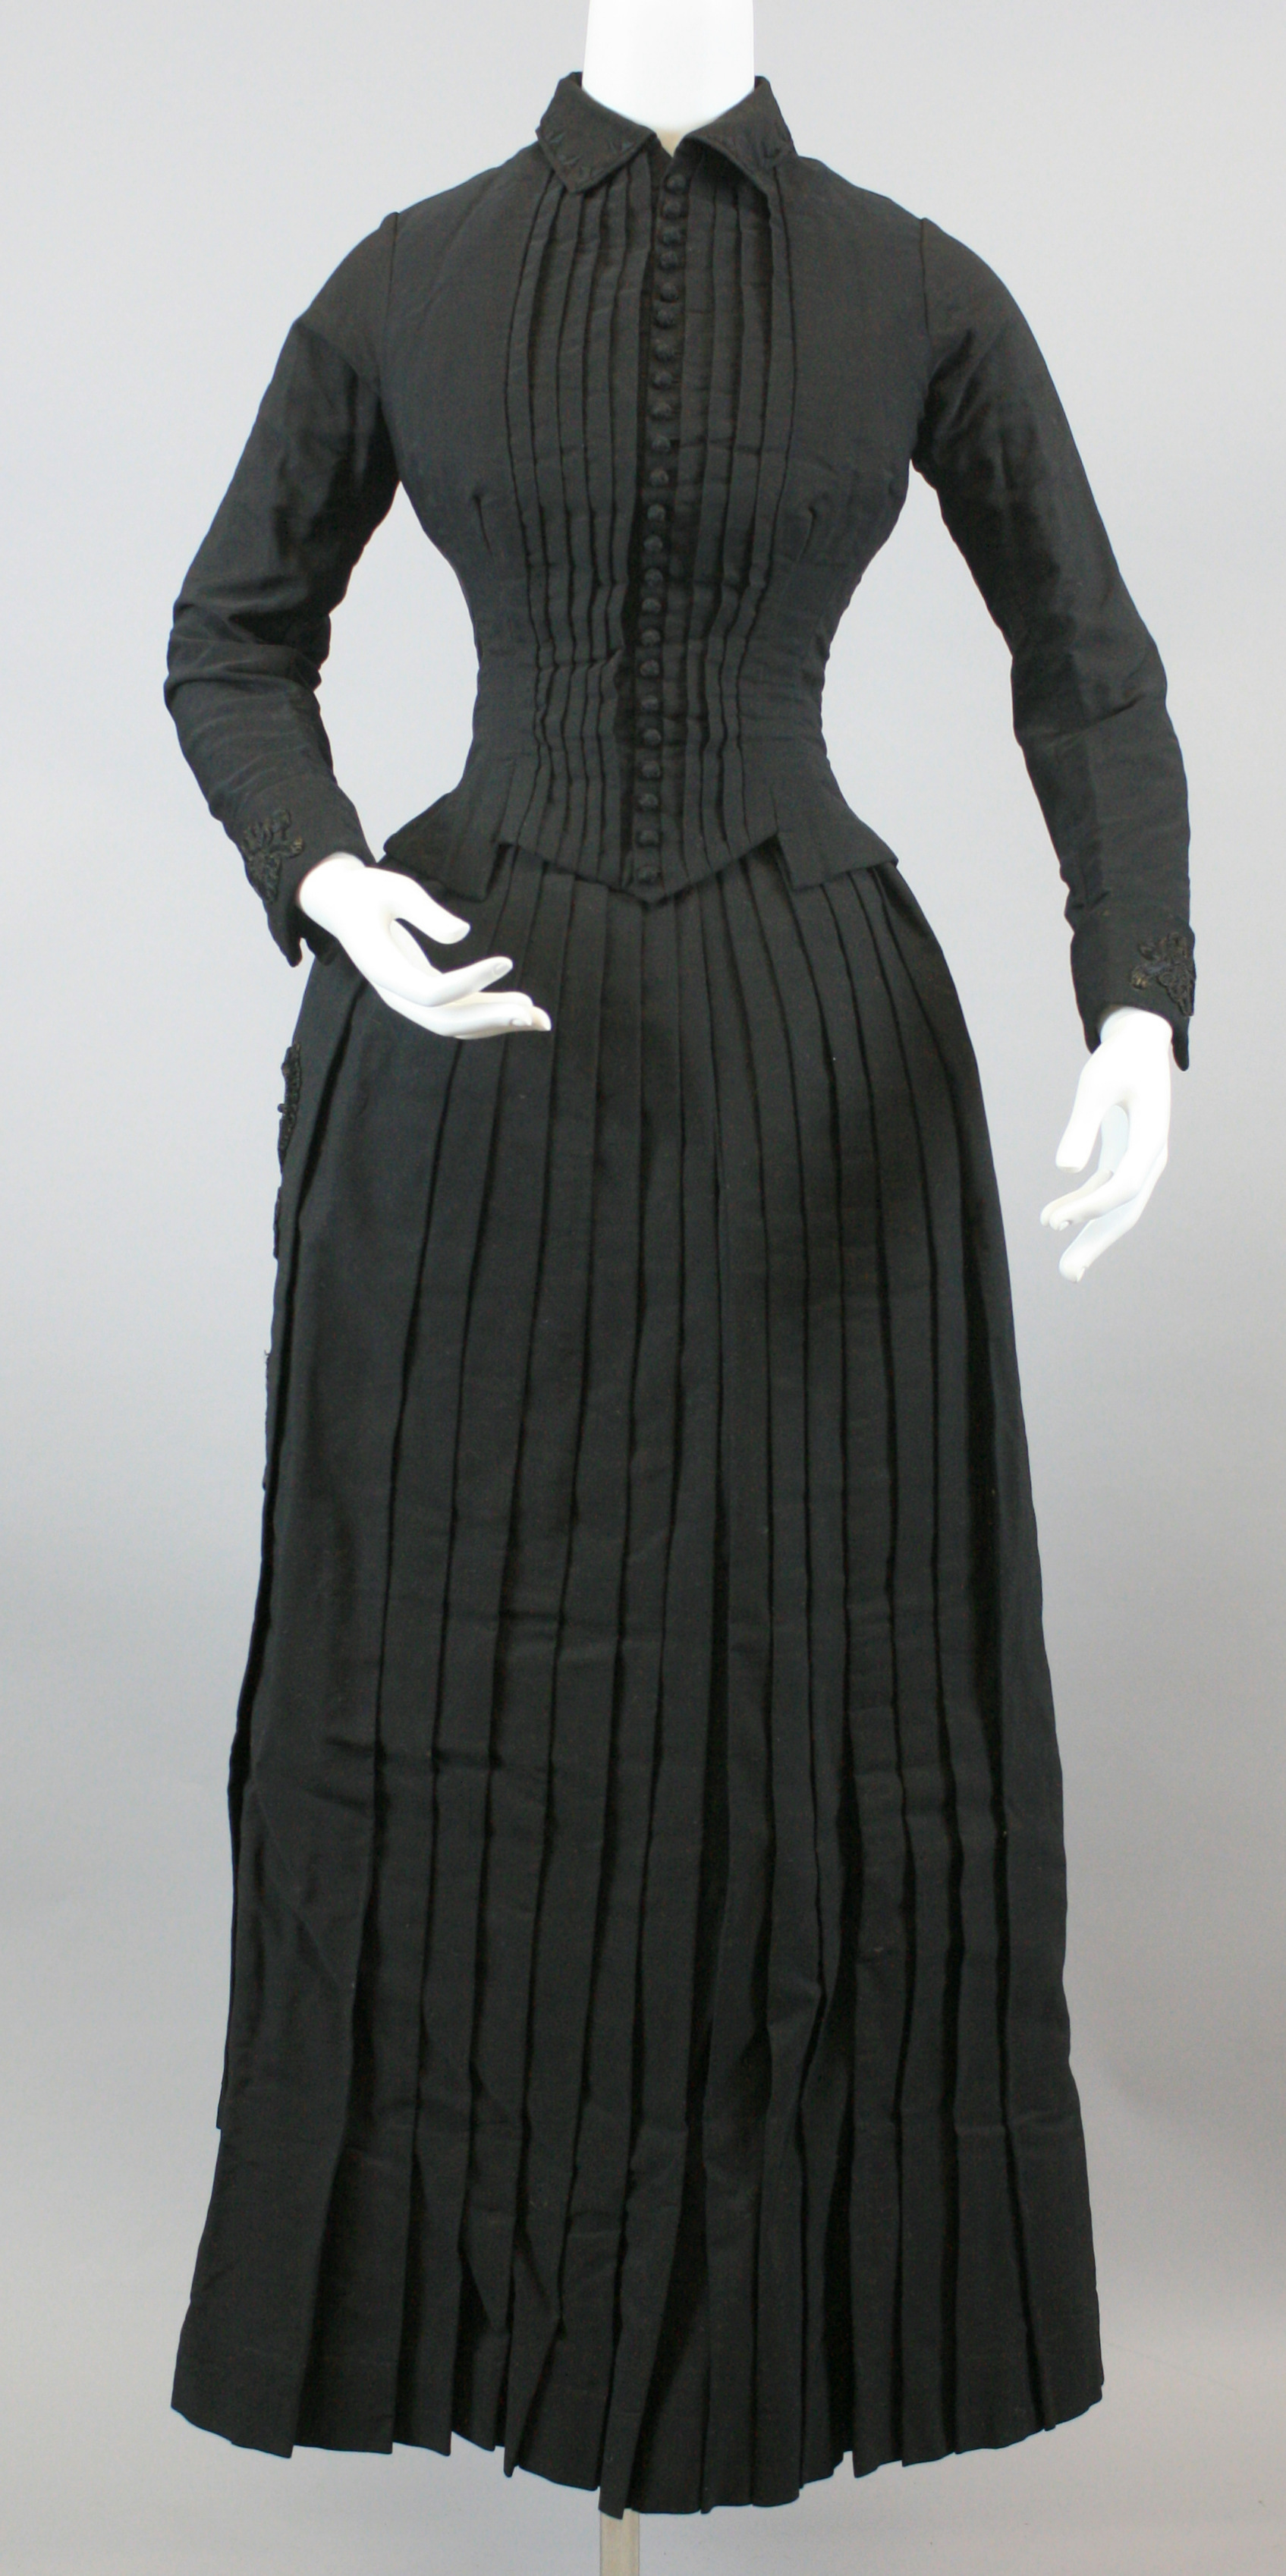  Clothing that tells stories. This dress was worn by Louisa Heileman Mueller, daughter of Gottlieb and Johanna Heileman.&nbsp; 